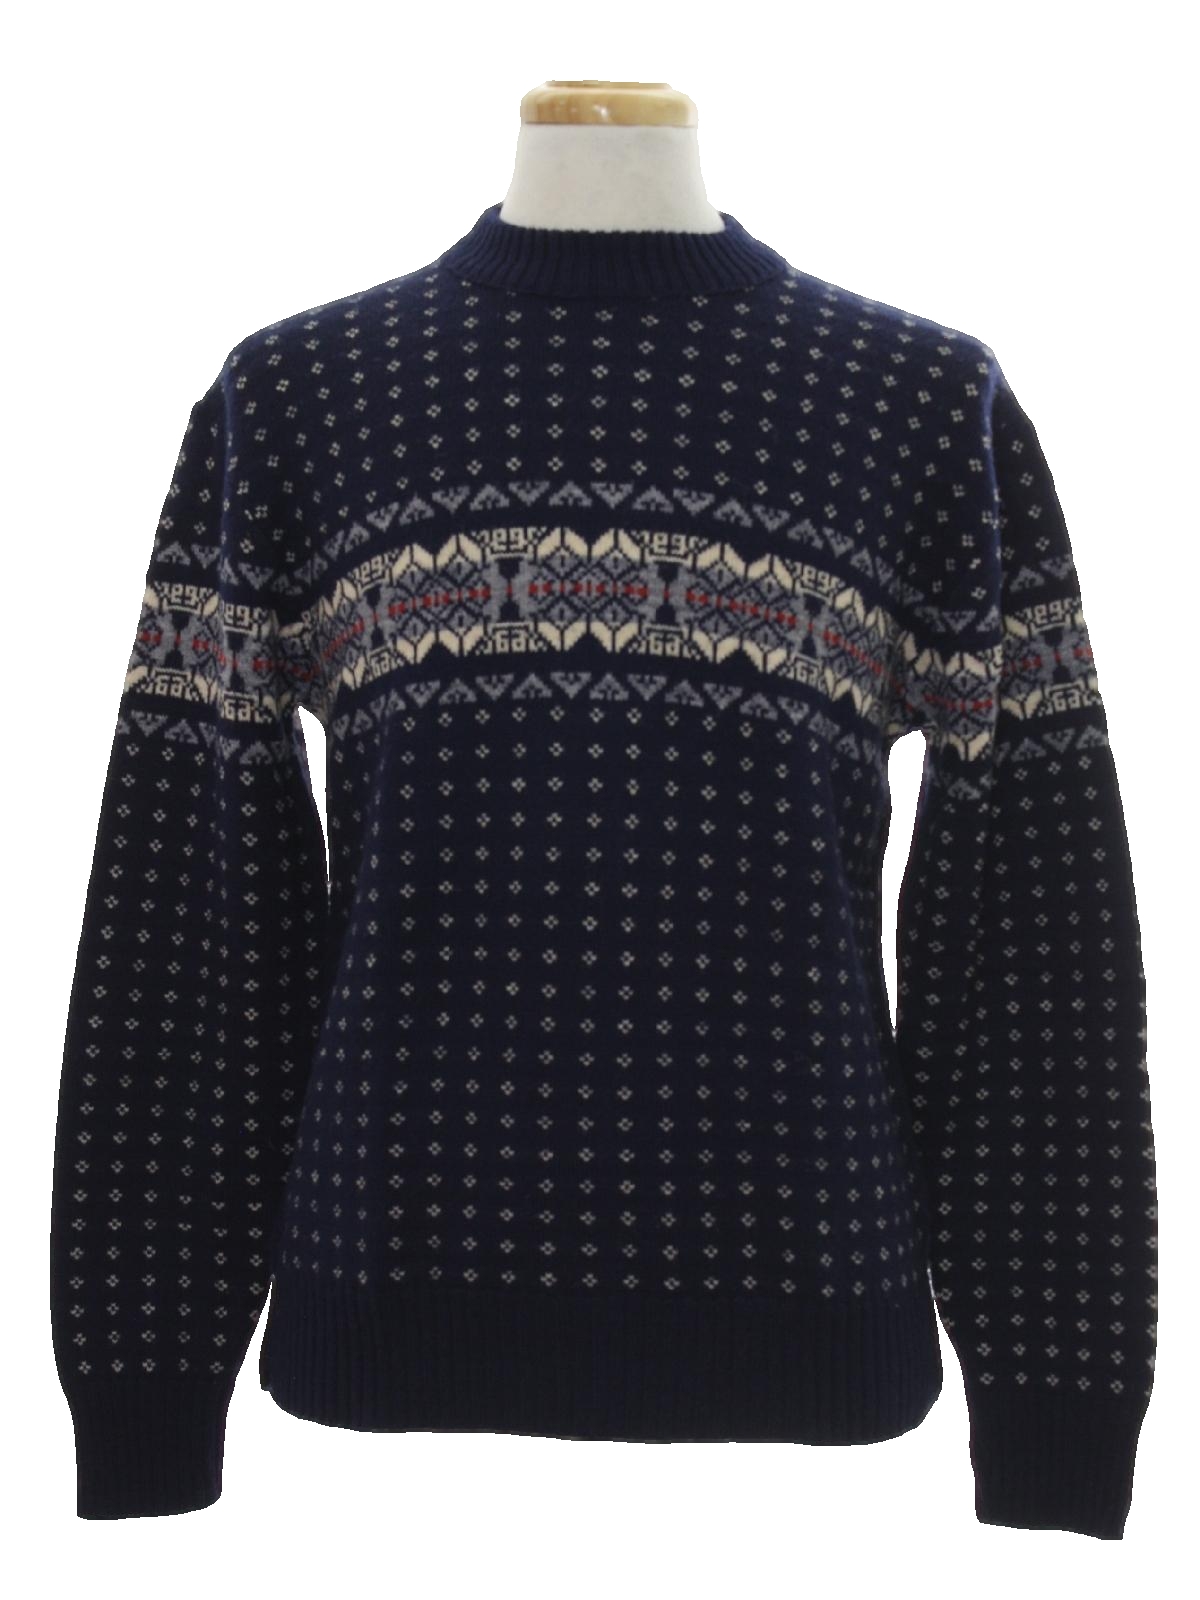 Vintage 80s Sweater: Early 80s vintage -Missing Label- Mens navy blue ...